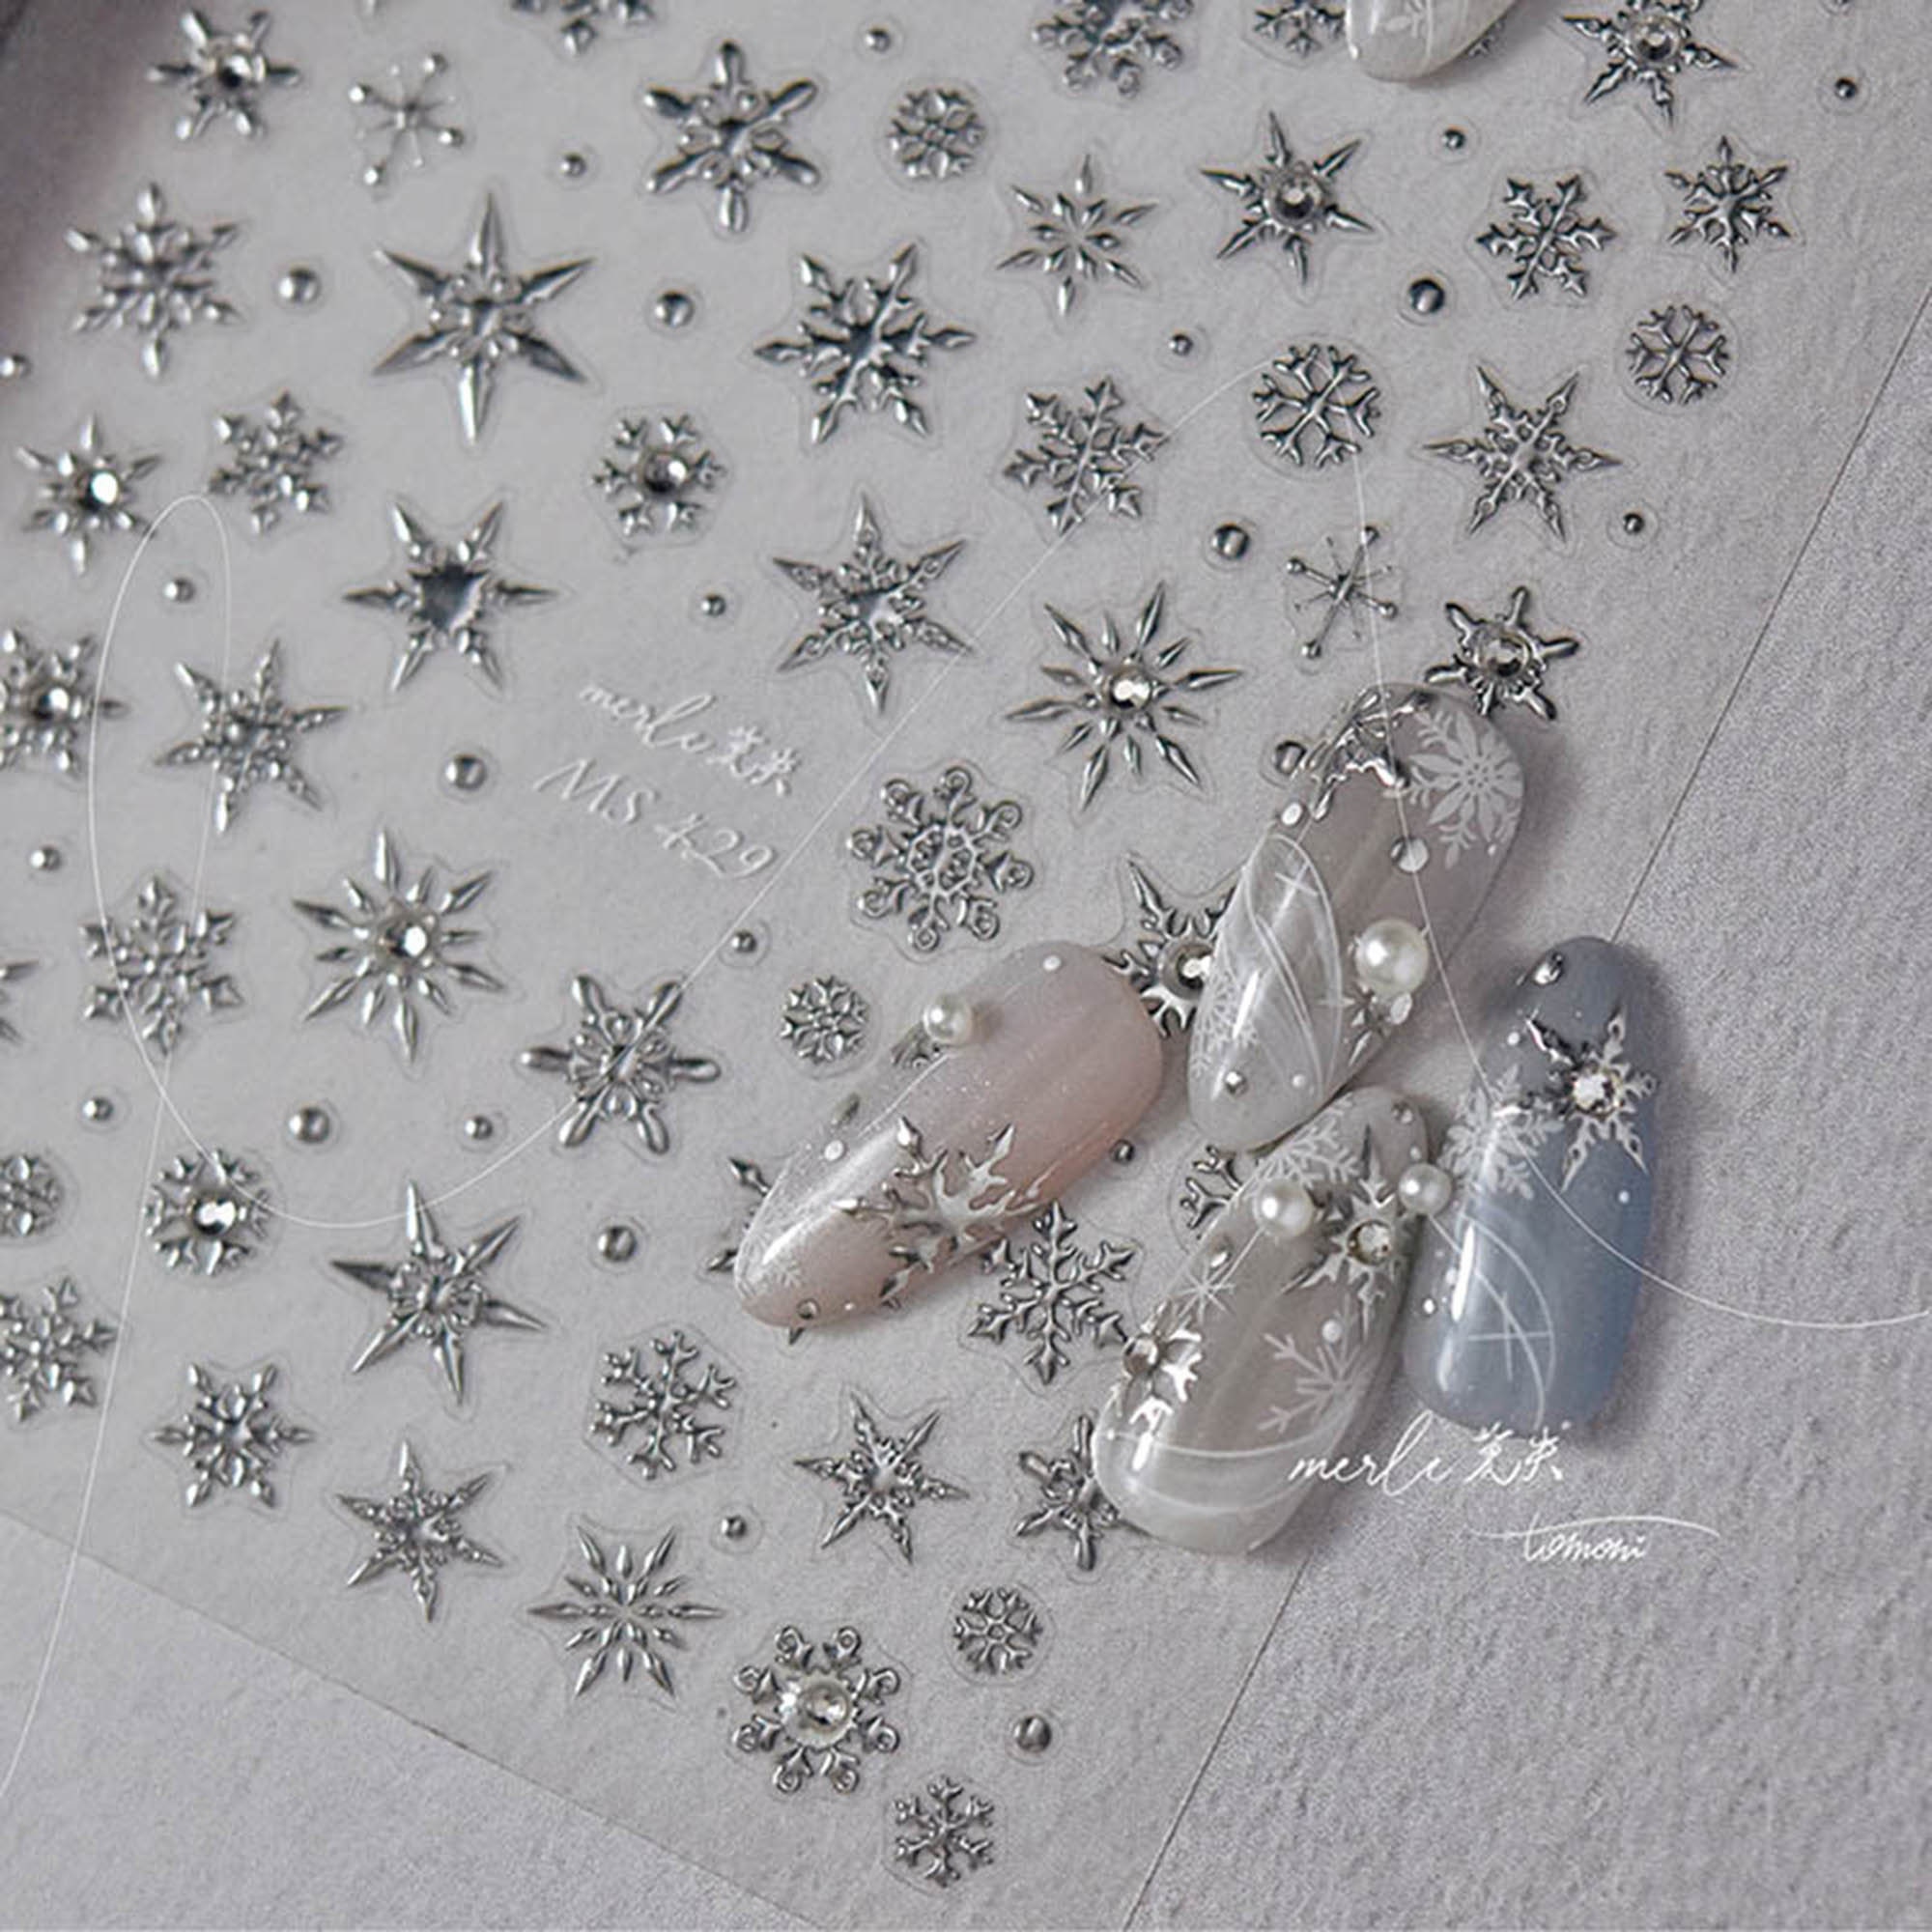 Yodoinky 20pcs Christmas Snowflake Nail Charms, Silver Snowflake Charms for Acrylic Nails,3D Alloy Snowflake Nail Charms for Women DIY Winter Christmas Nails